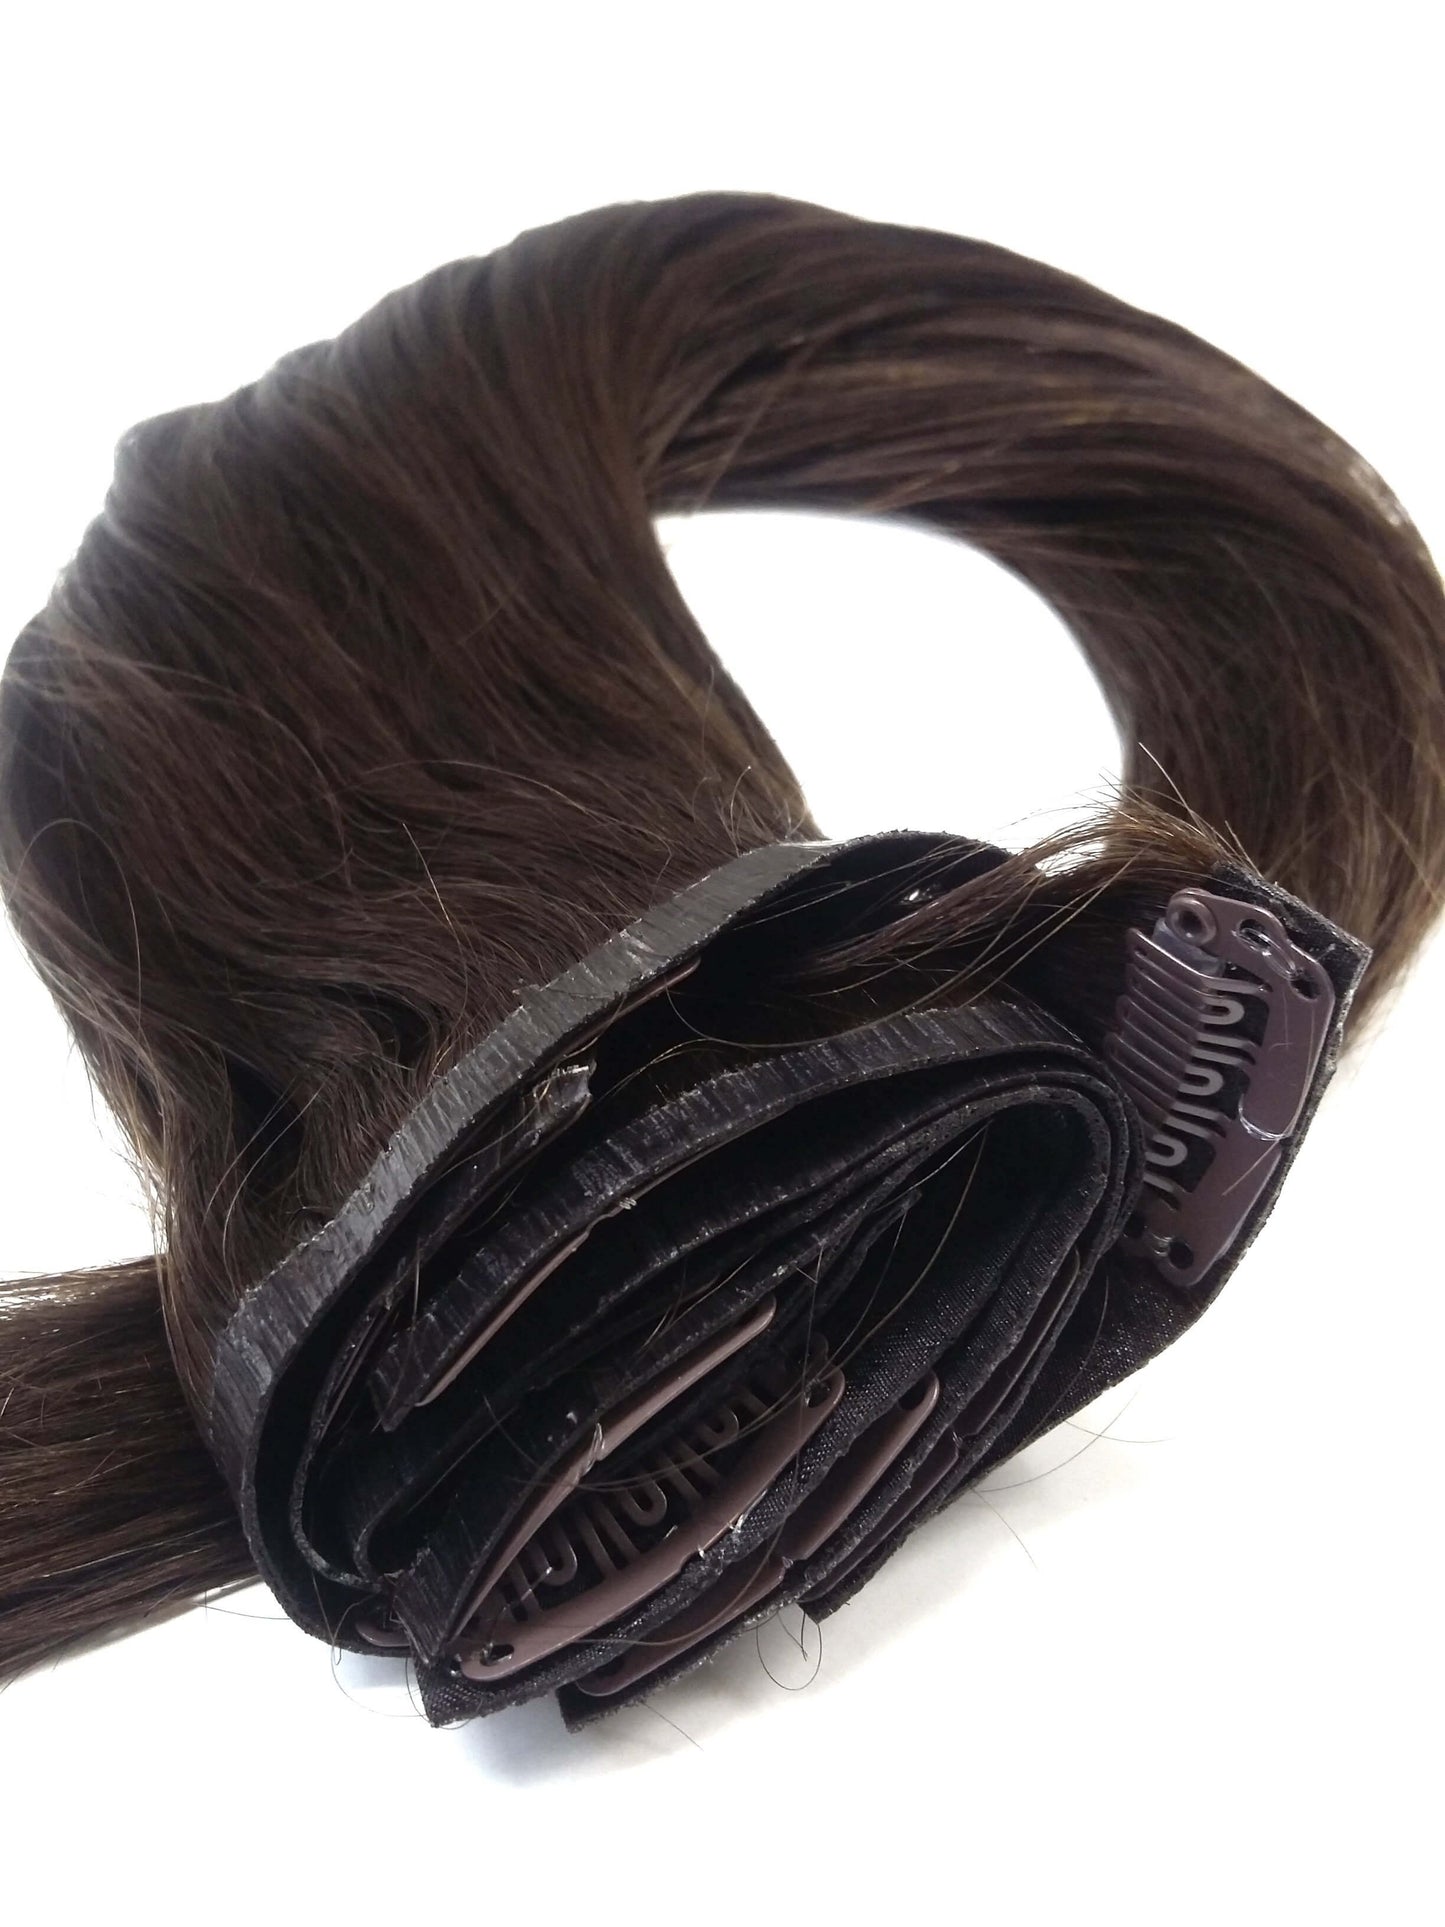 Brazilian Virgin Remy Human Hair - PU Clip In Extensions, 20'', Rak, Färg 2 ,100 g - Snabb leverans